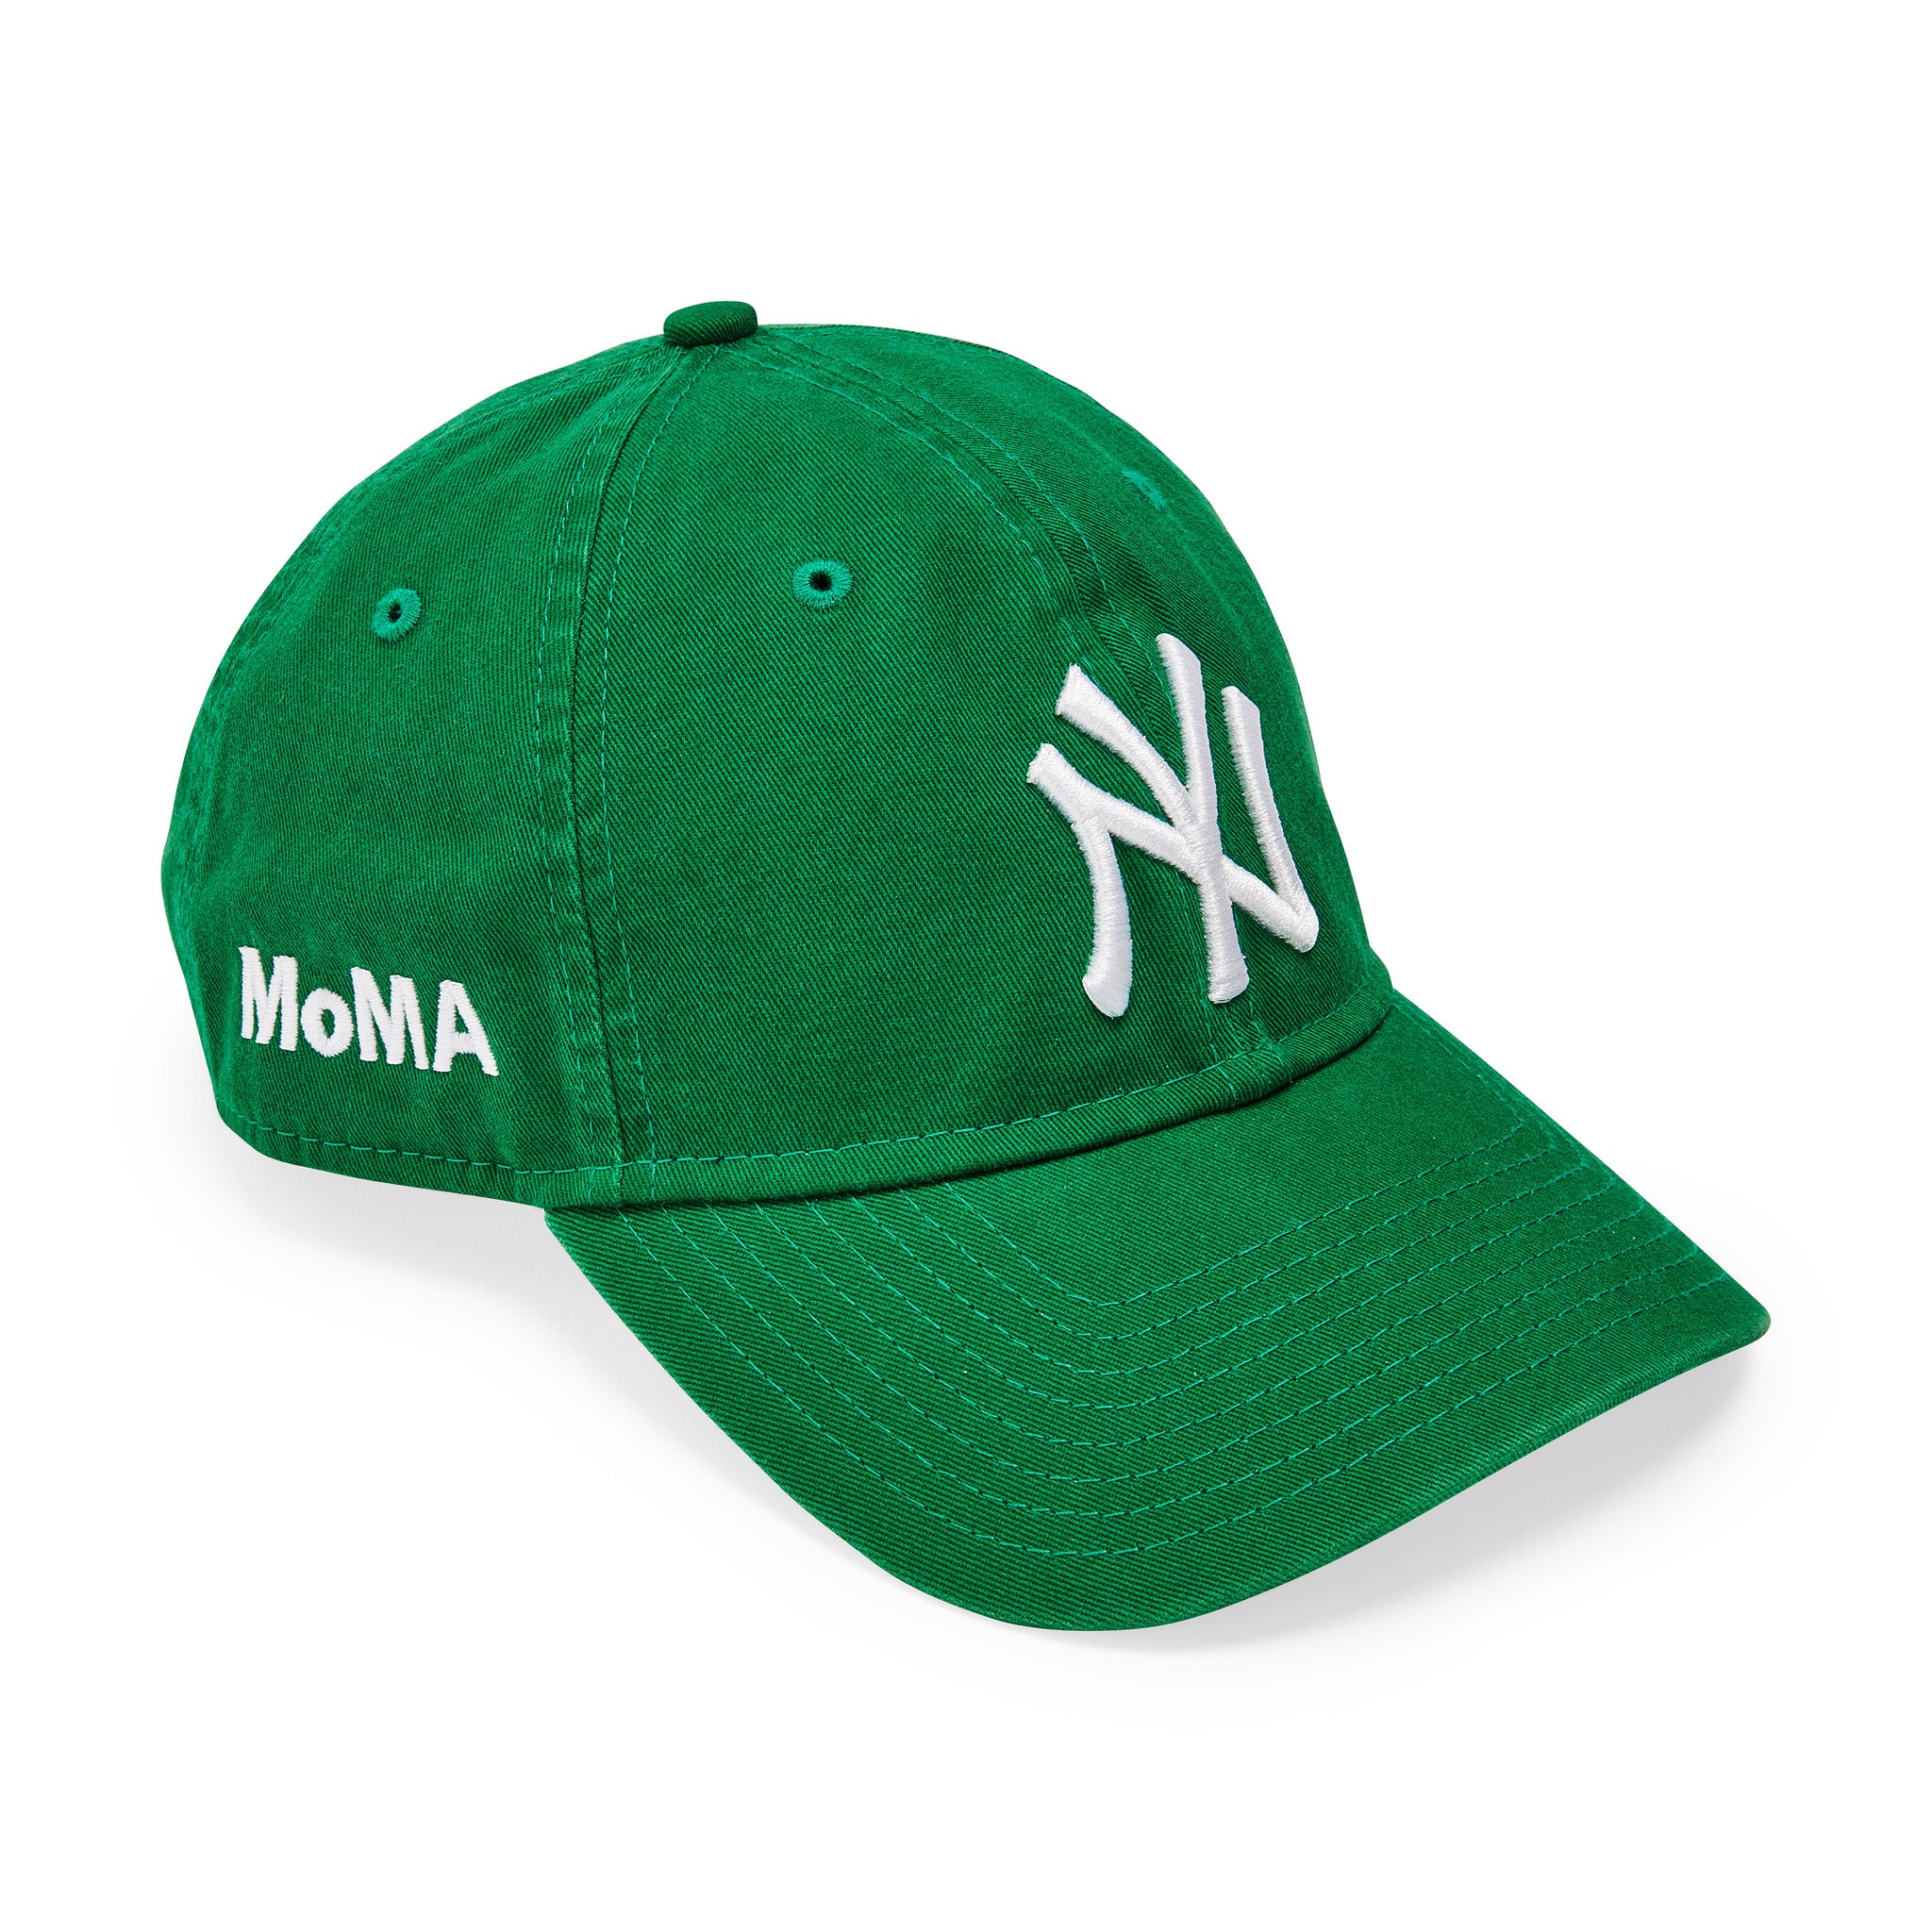 MoMA NY Yankees Adjustable Baseball Cap - Kelly Green